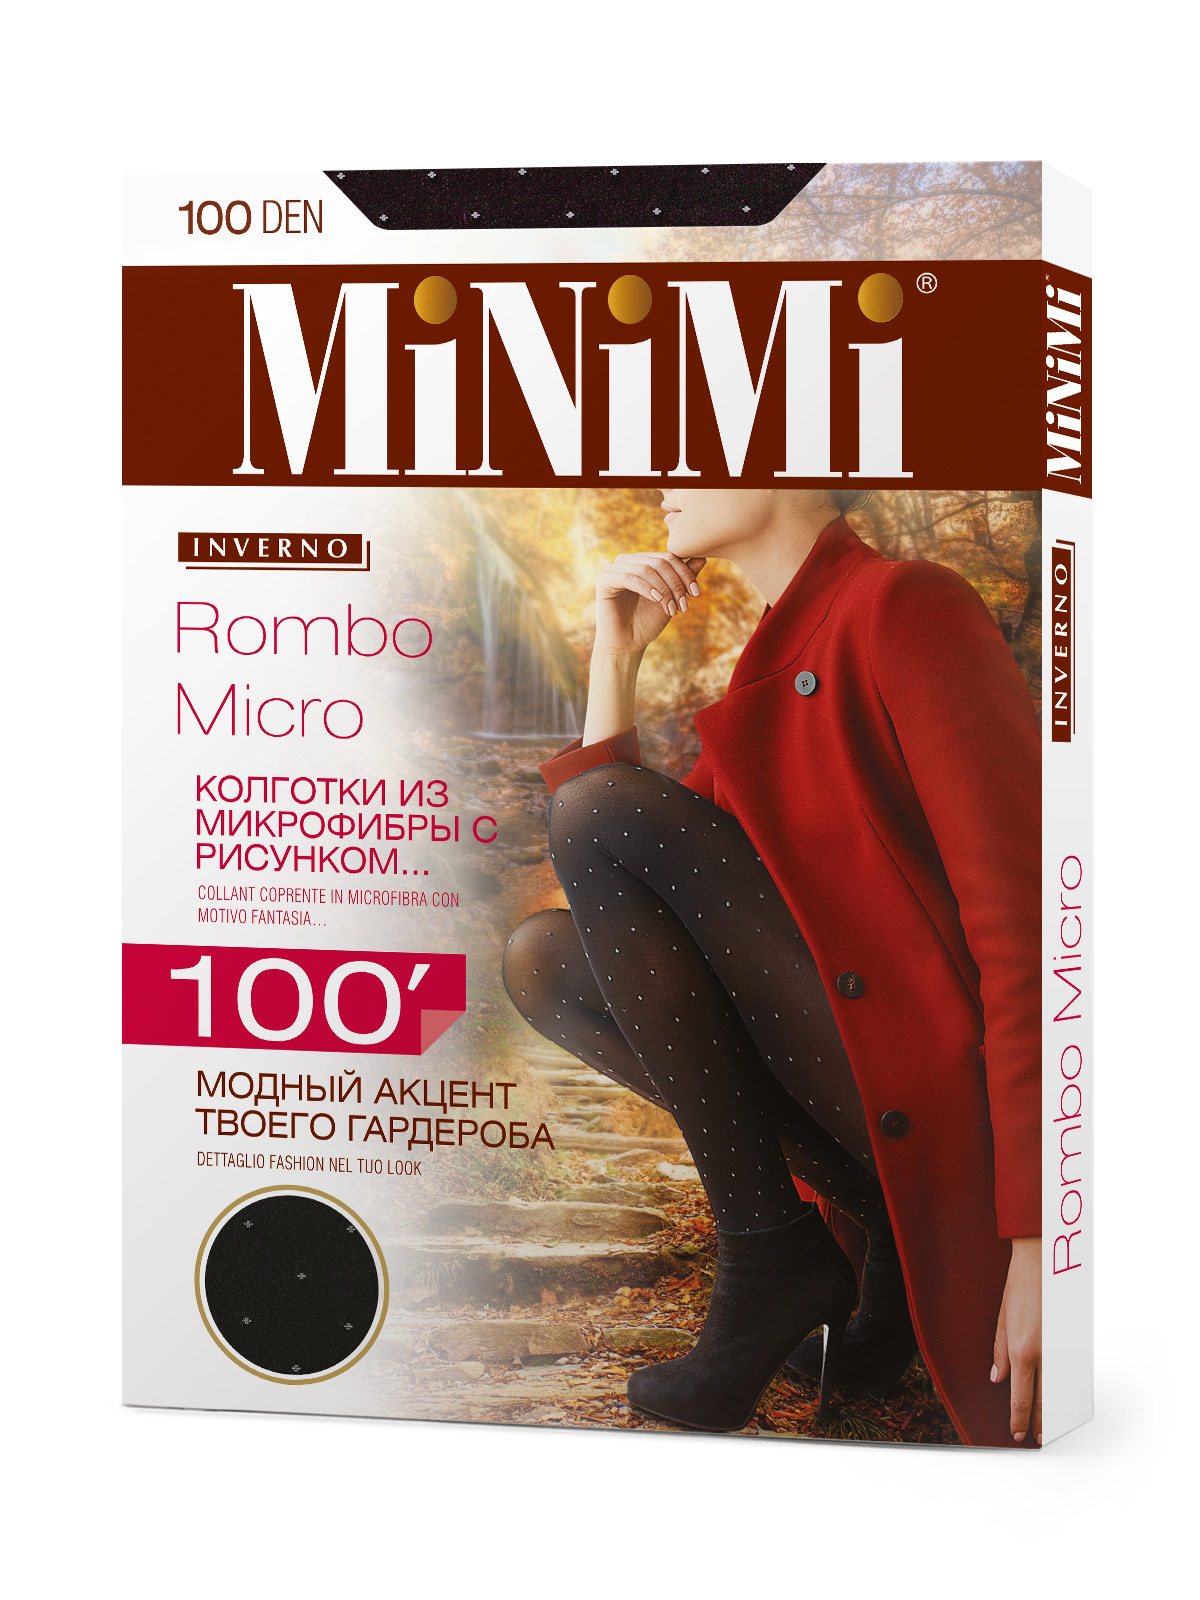 Minimi Rombo micro 100